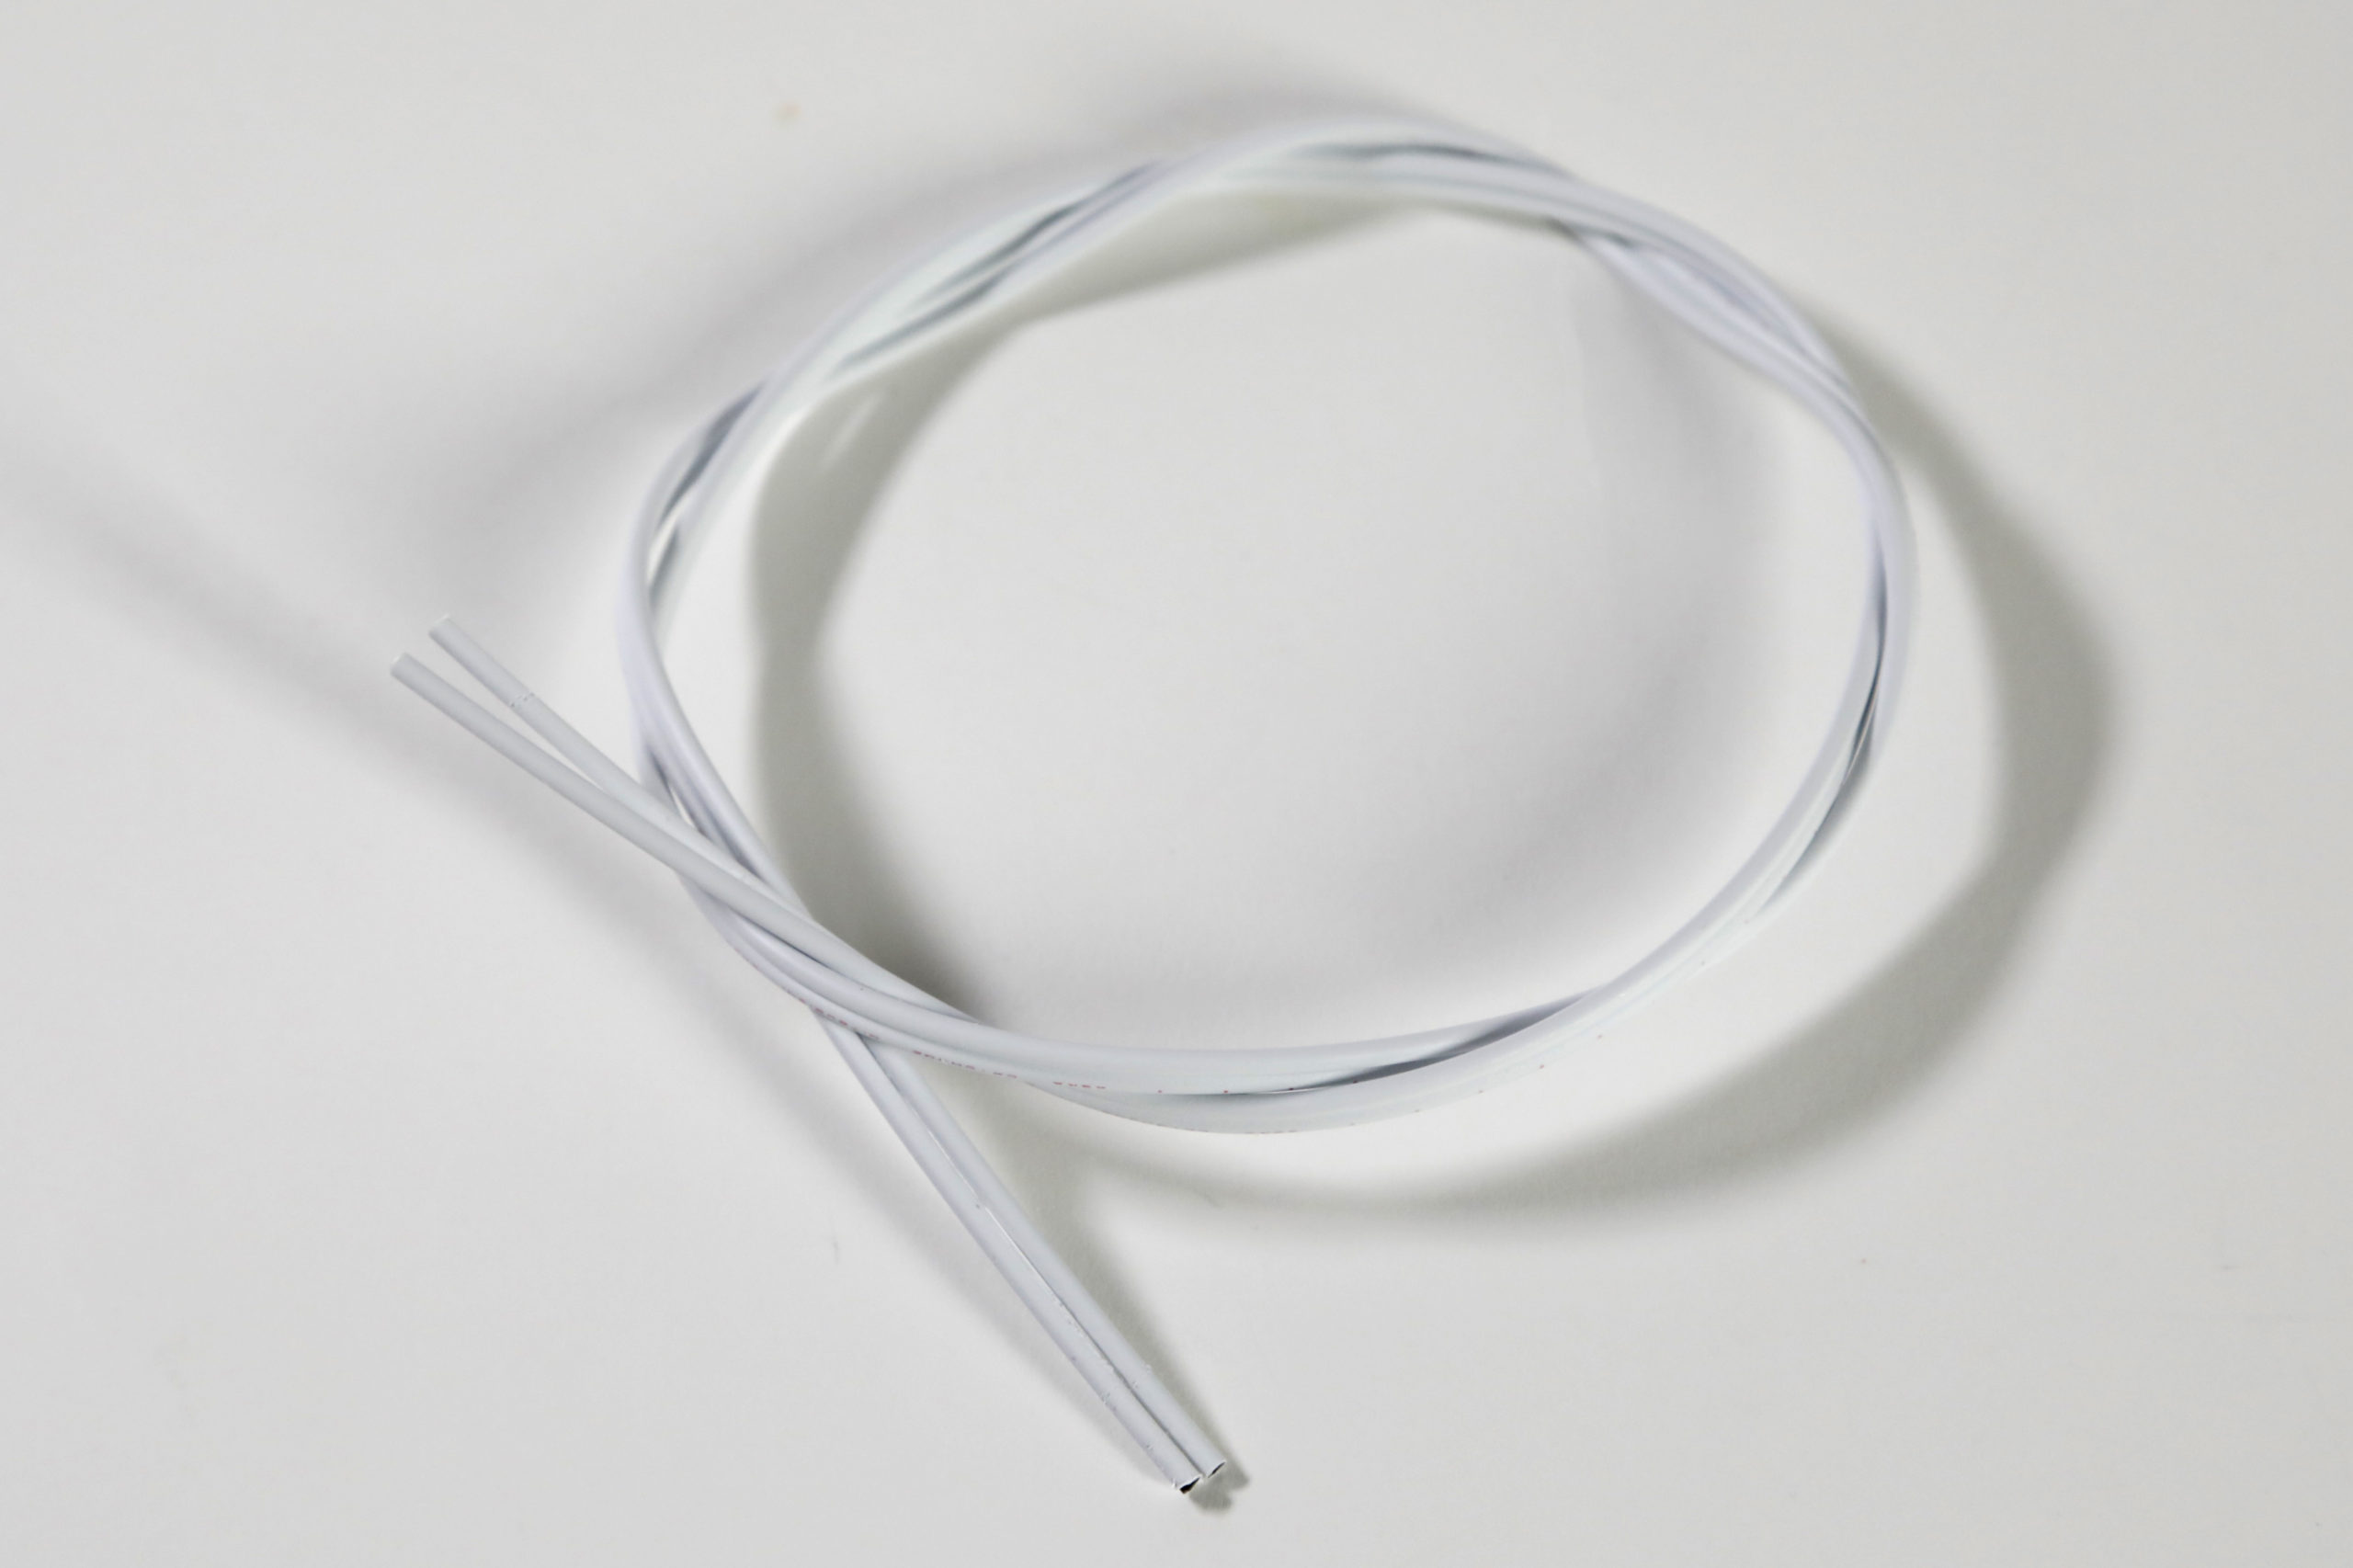 Cable de Fibra Óptica Plástica